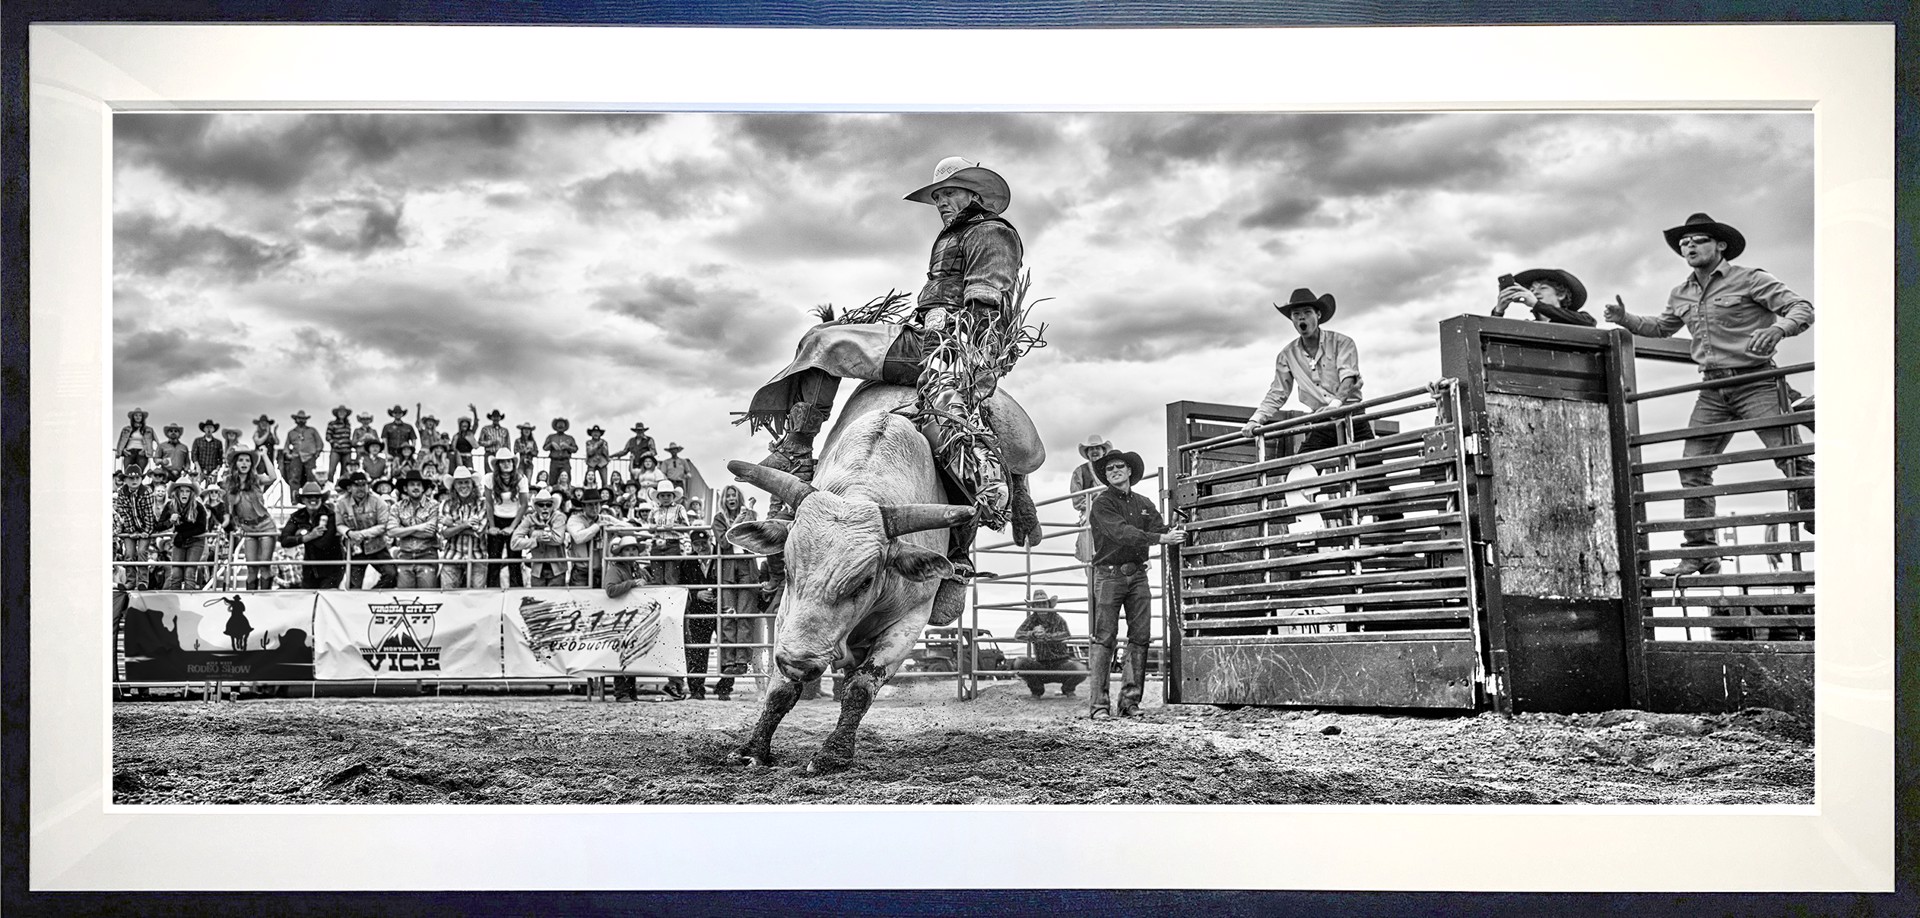 Rodeo by David Yarrow